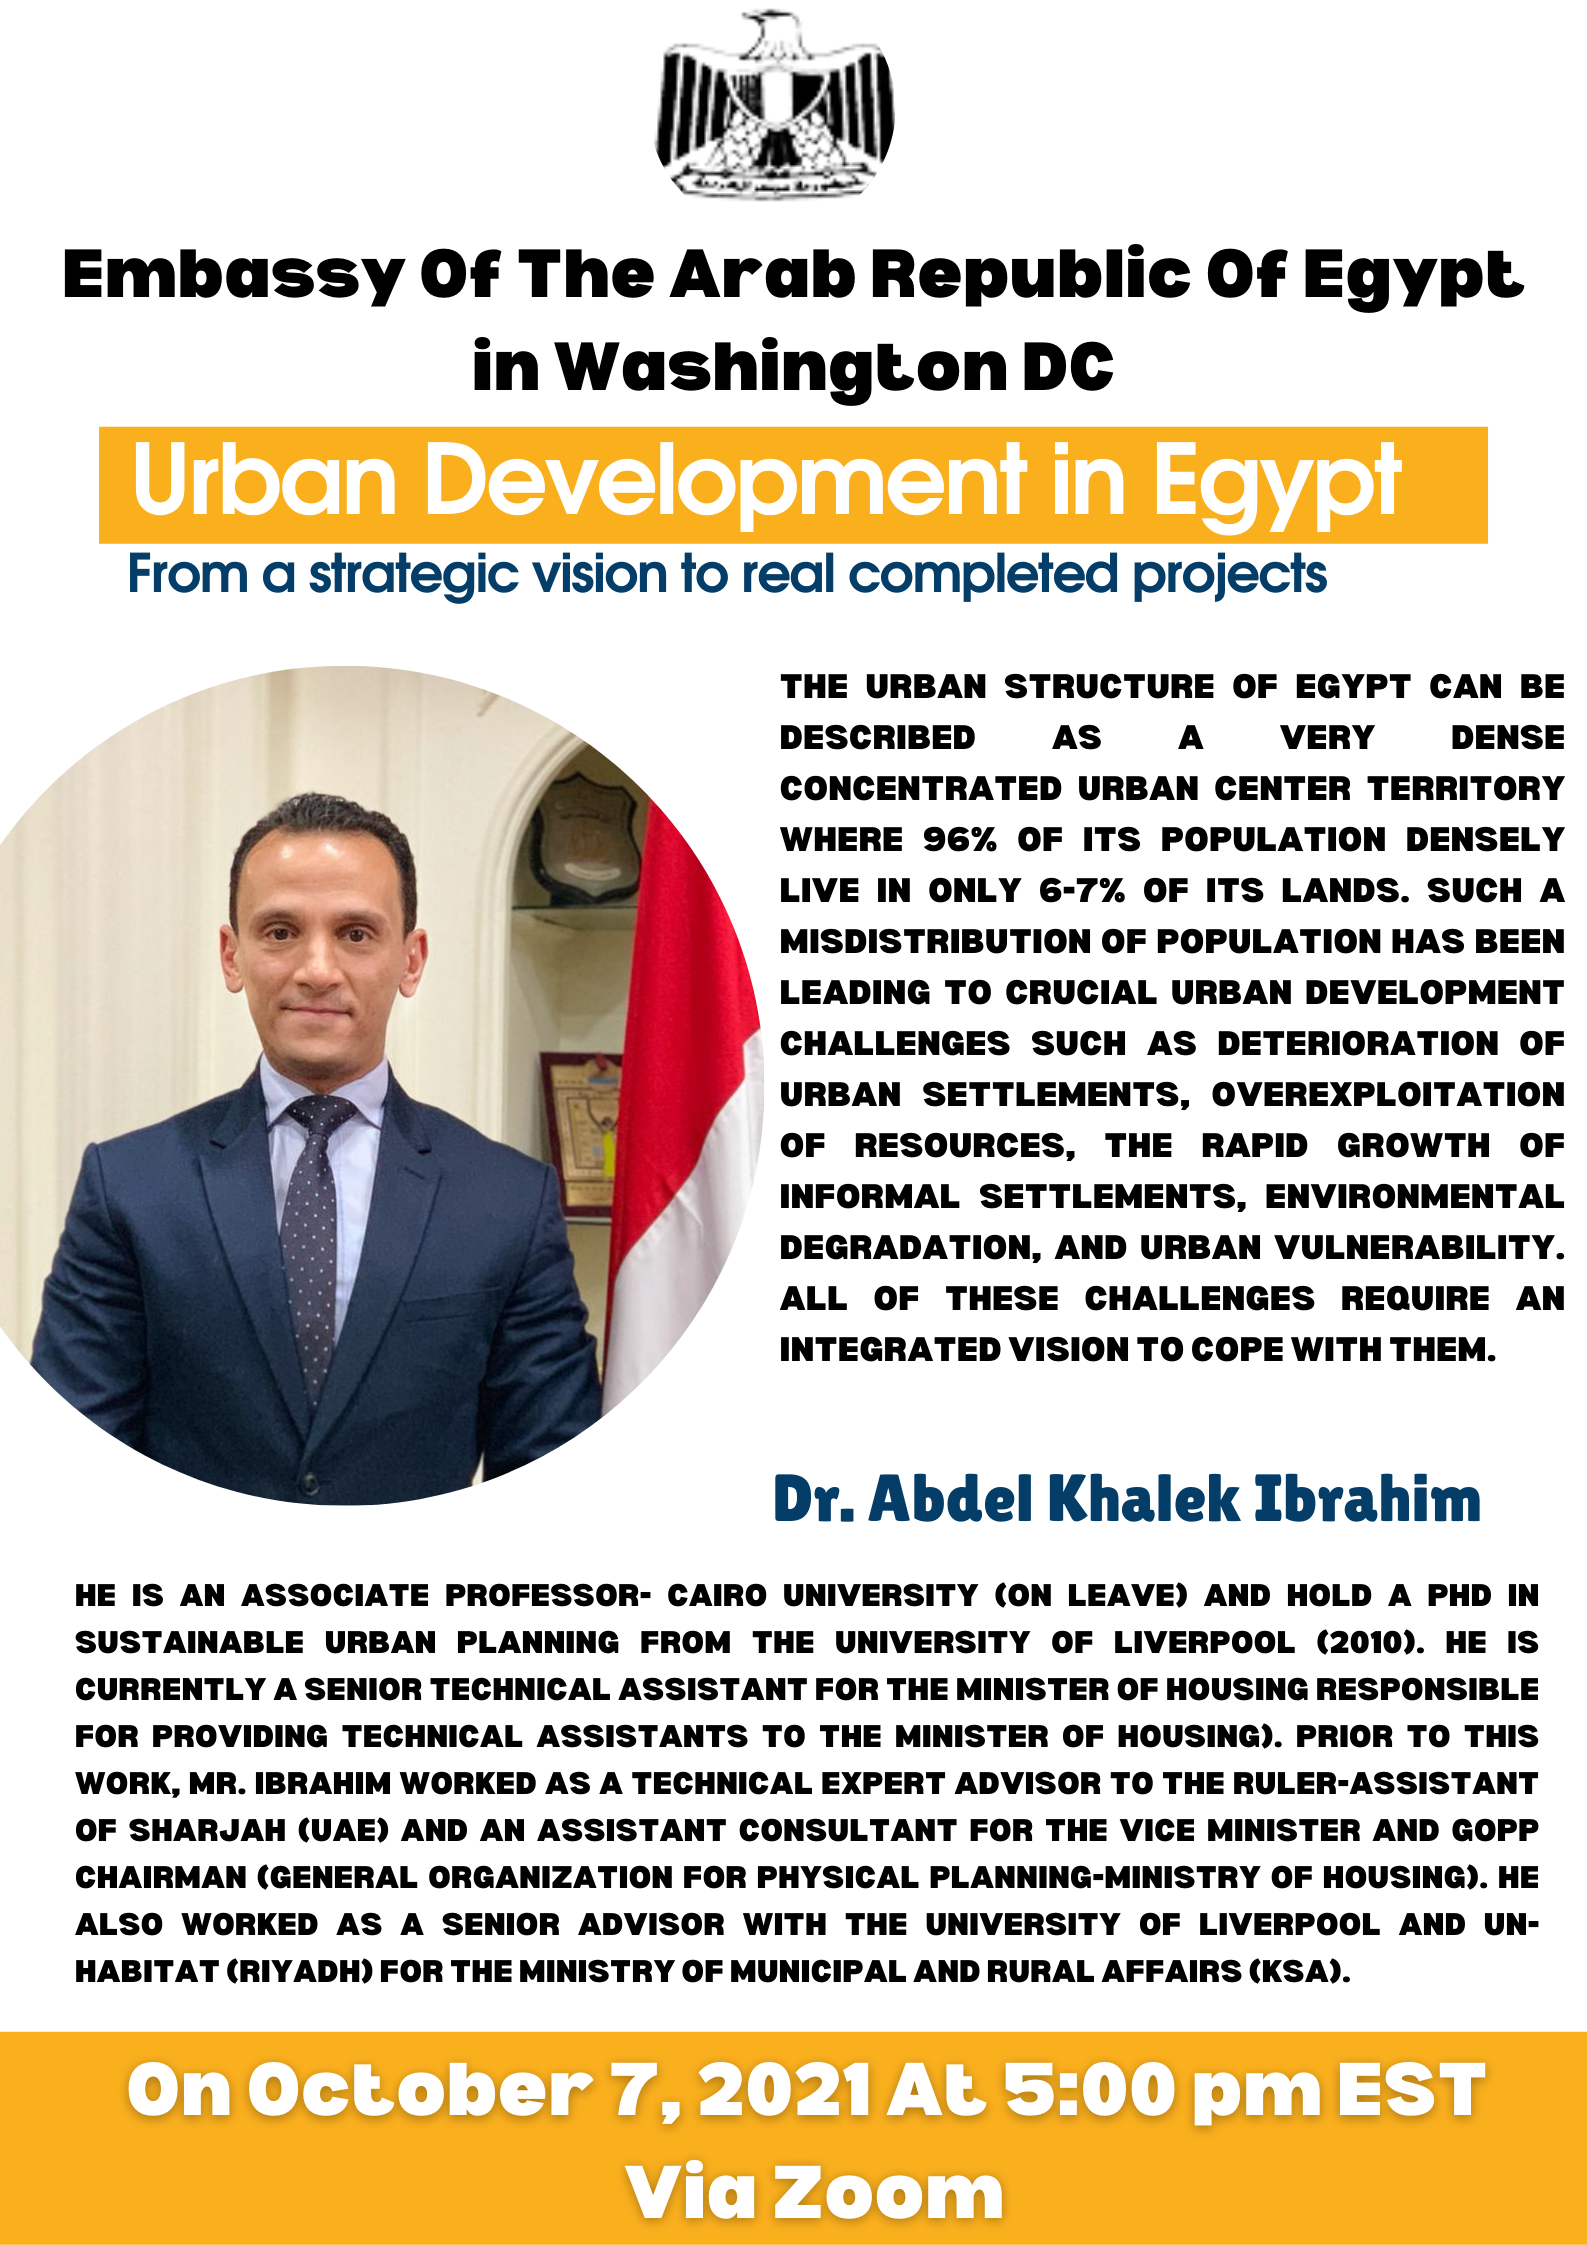 Dr. Abdel Khalek Ibrahim